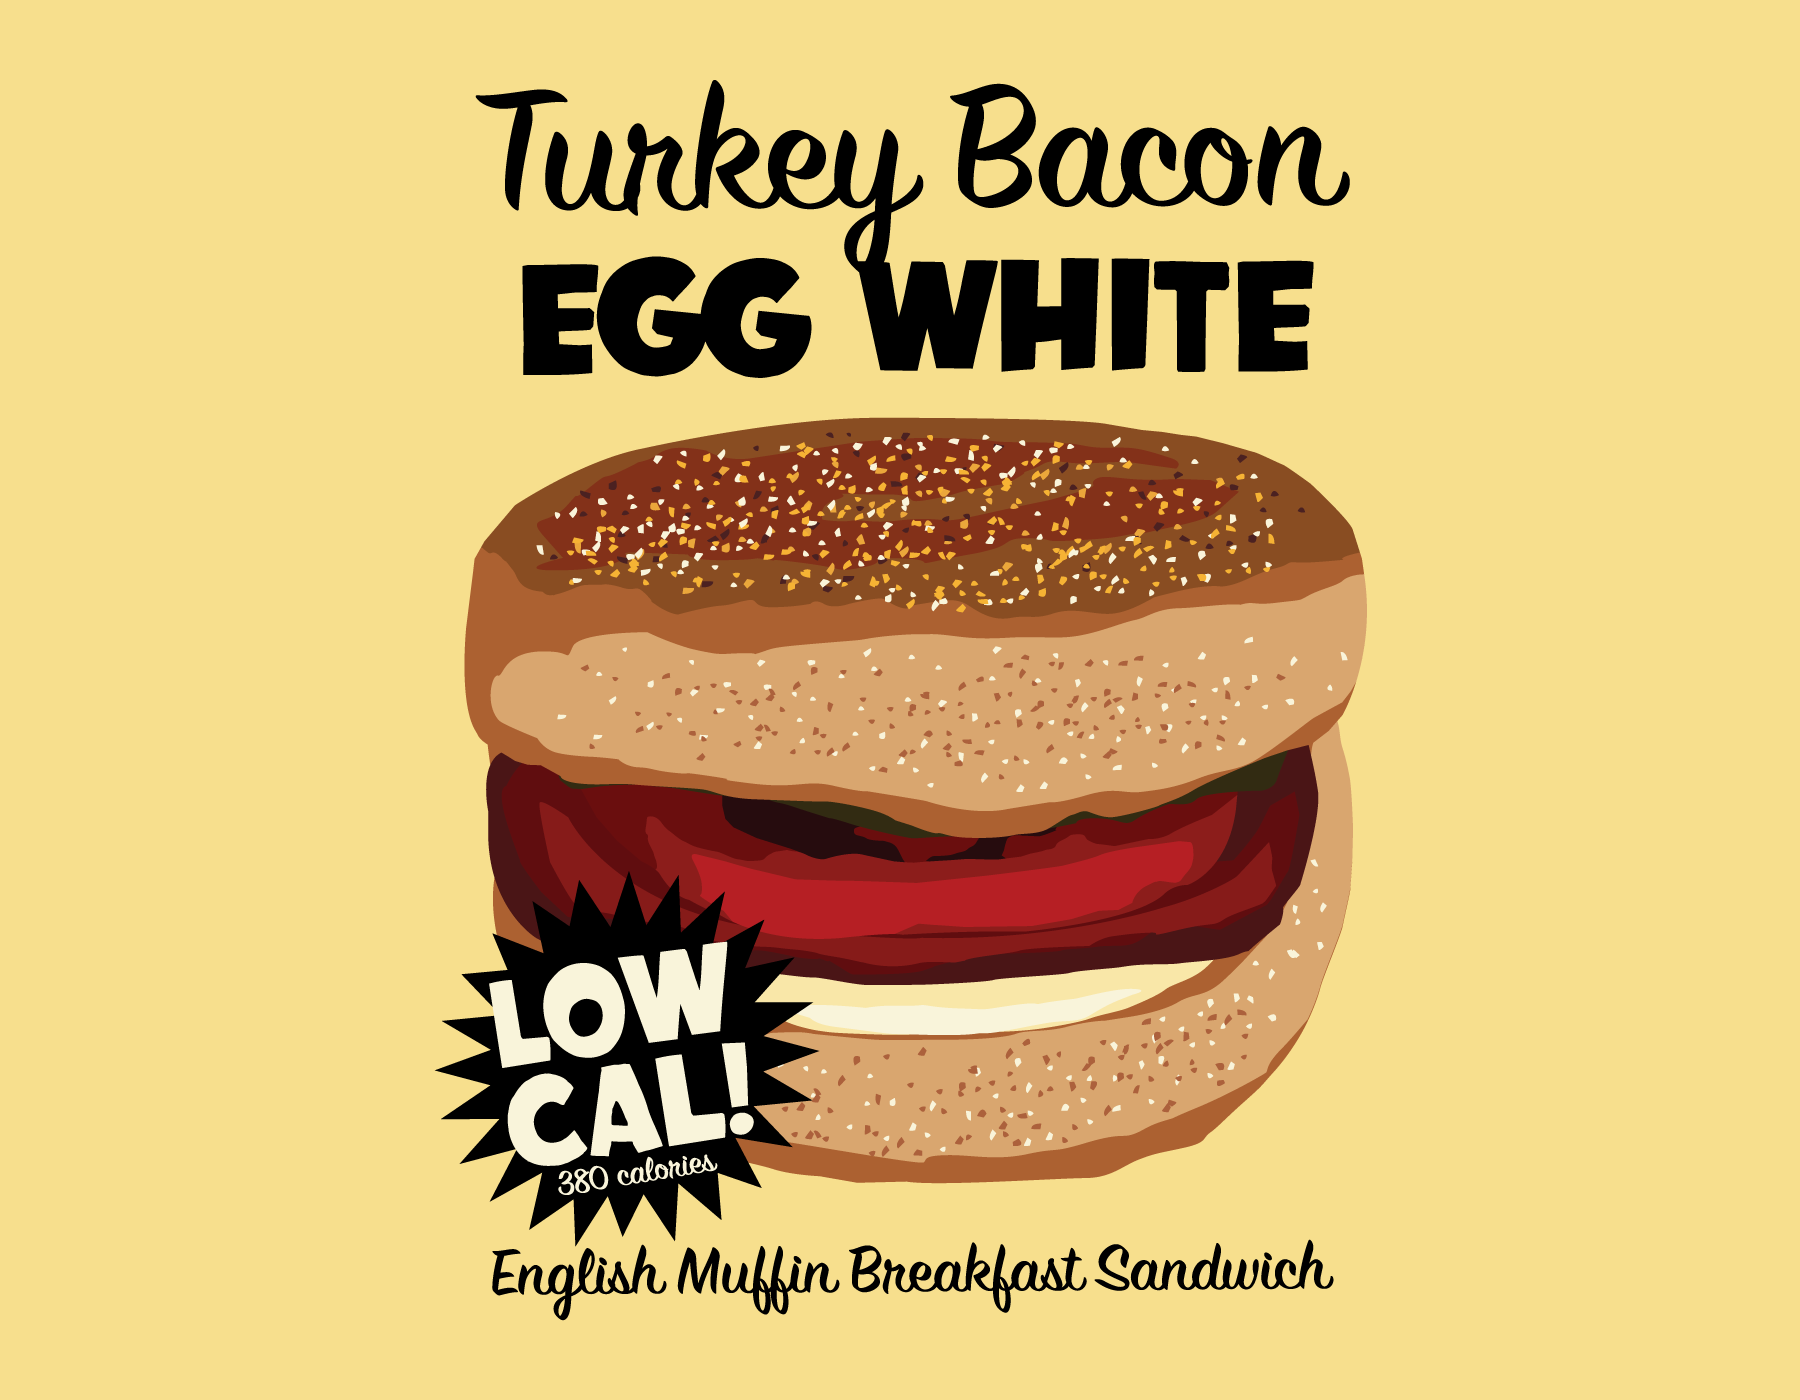 New! Low-Cal Turkey Bacon Egg White Sandwich